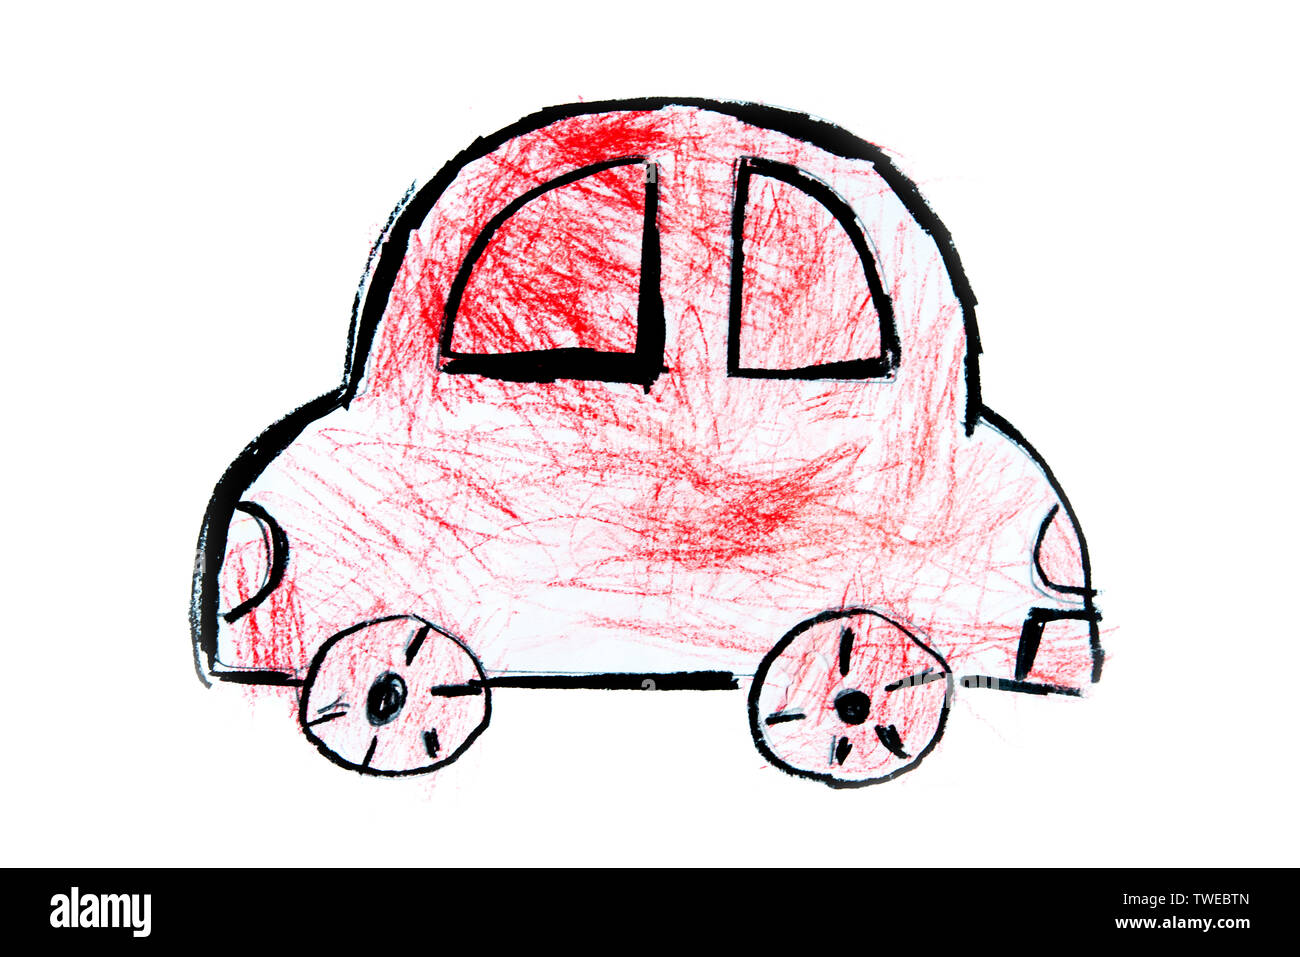 https://c8.alamy.com/comp/TWEBTN/child-artwork-hand-drawing-car-on-plain-background-TWEBTN.jpg